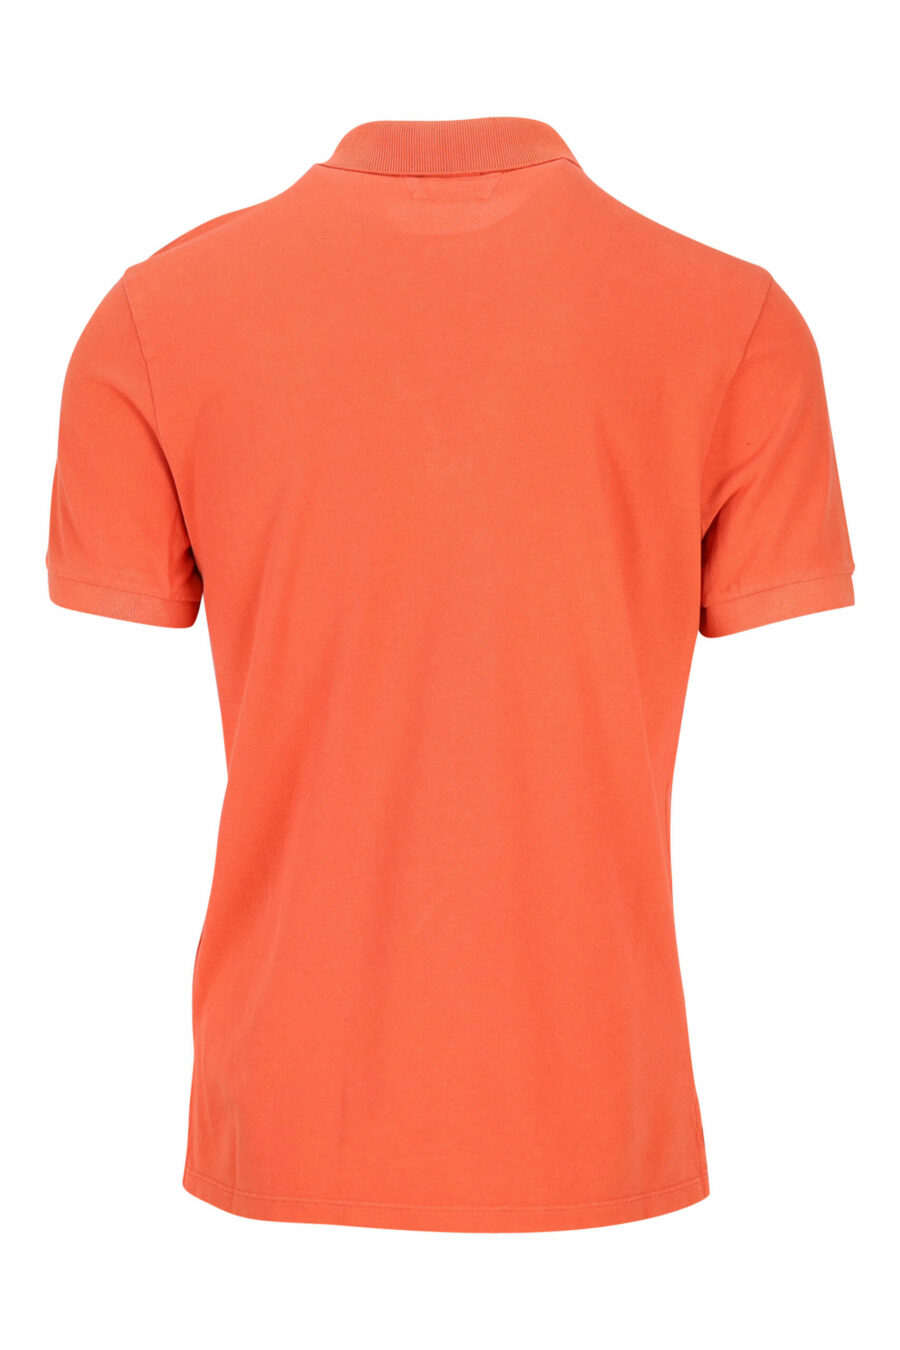 Orangefarbenes Poloshirt mit Mini-Logoaufnäher - 7620943642247 1 skaliert